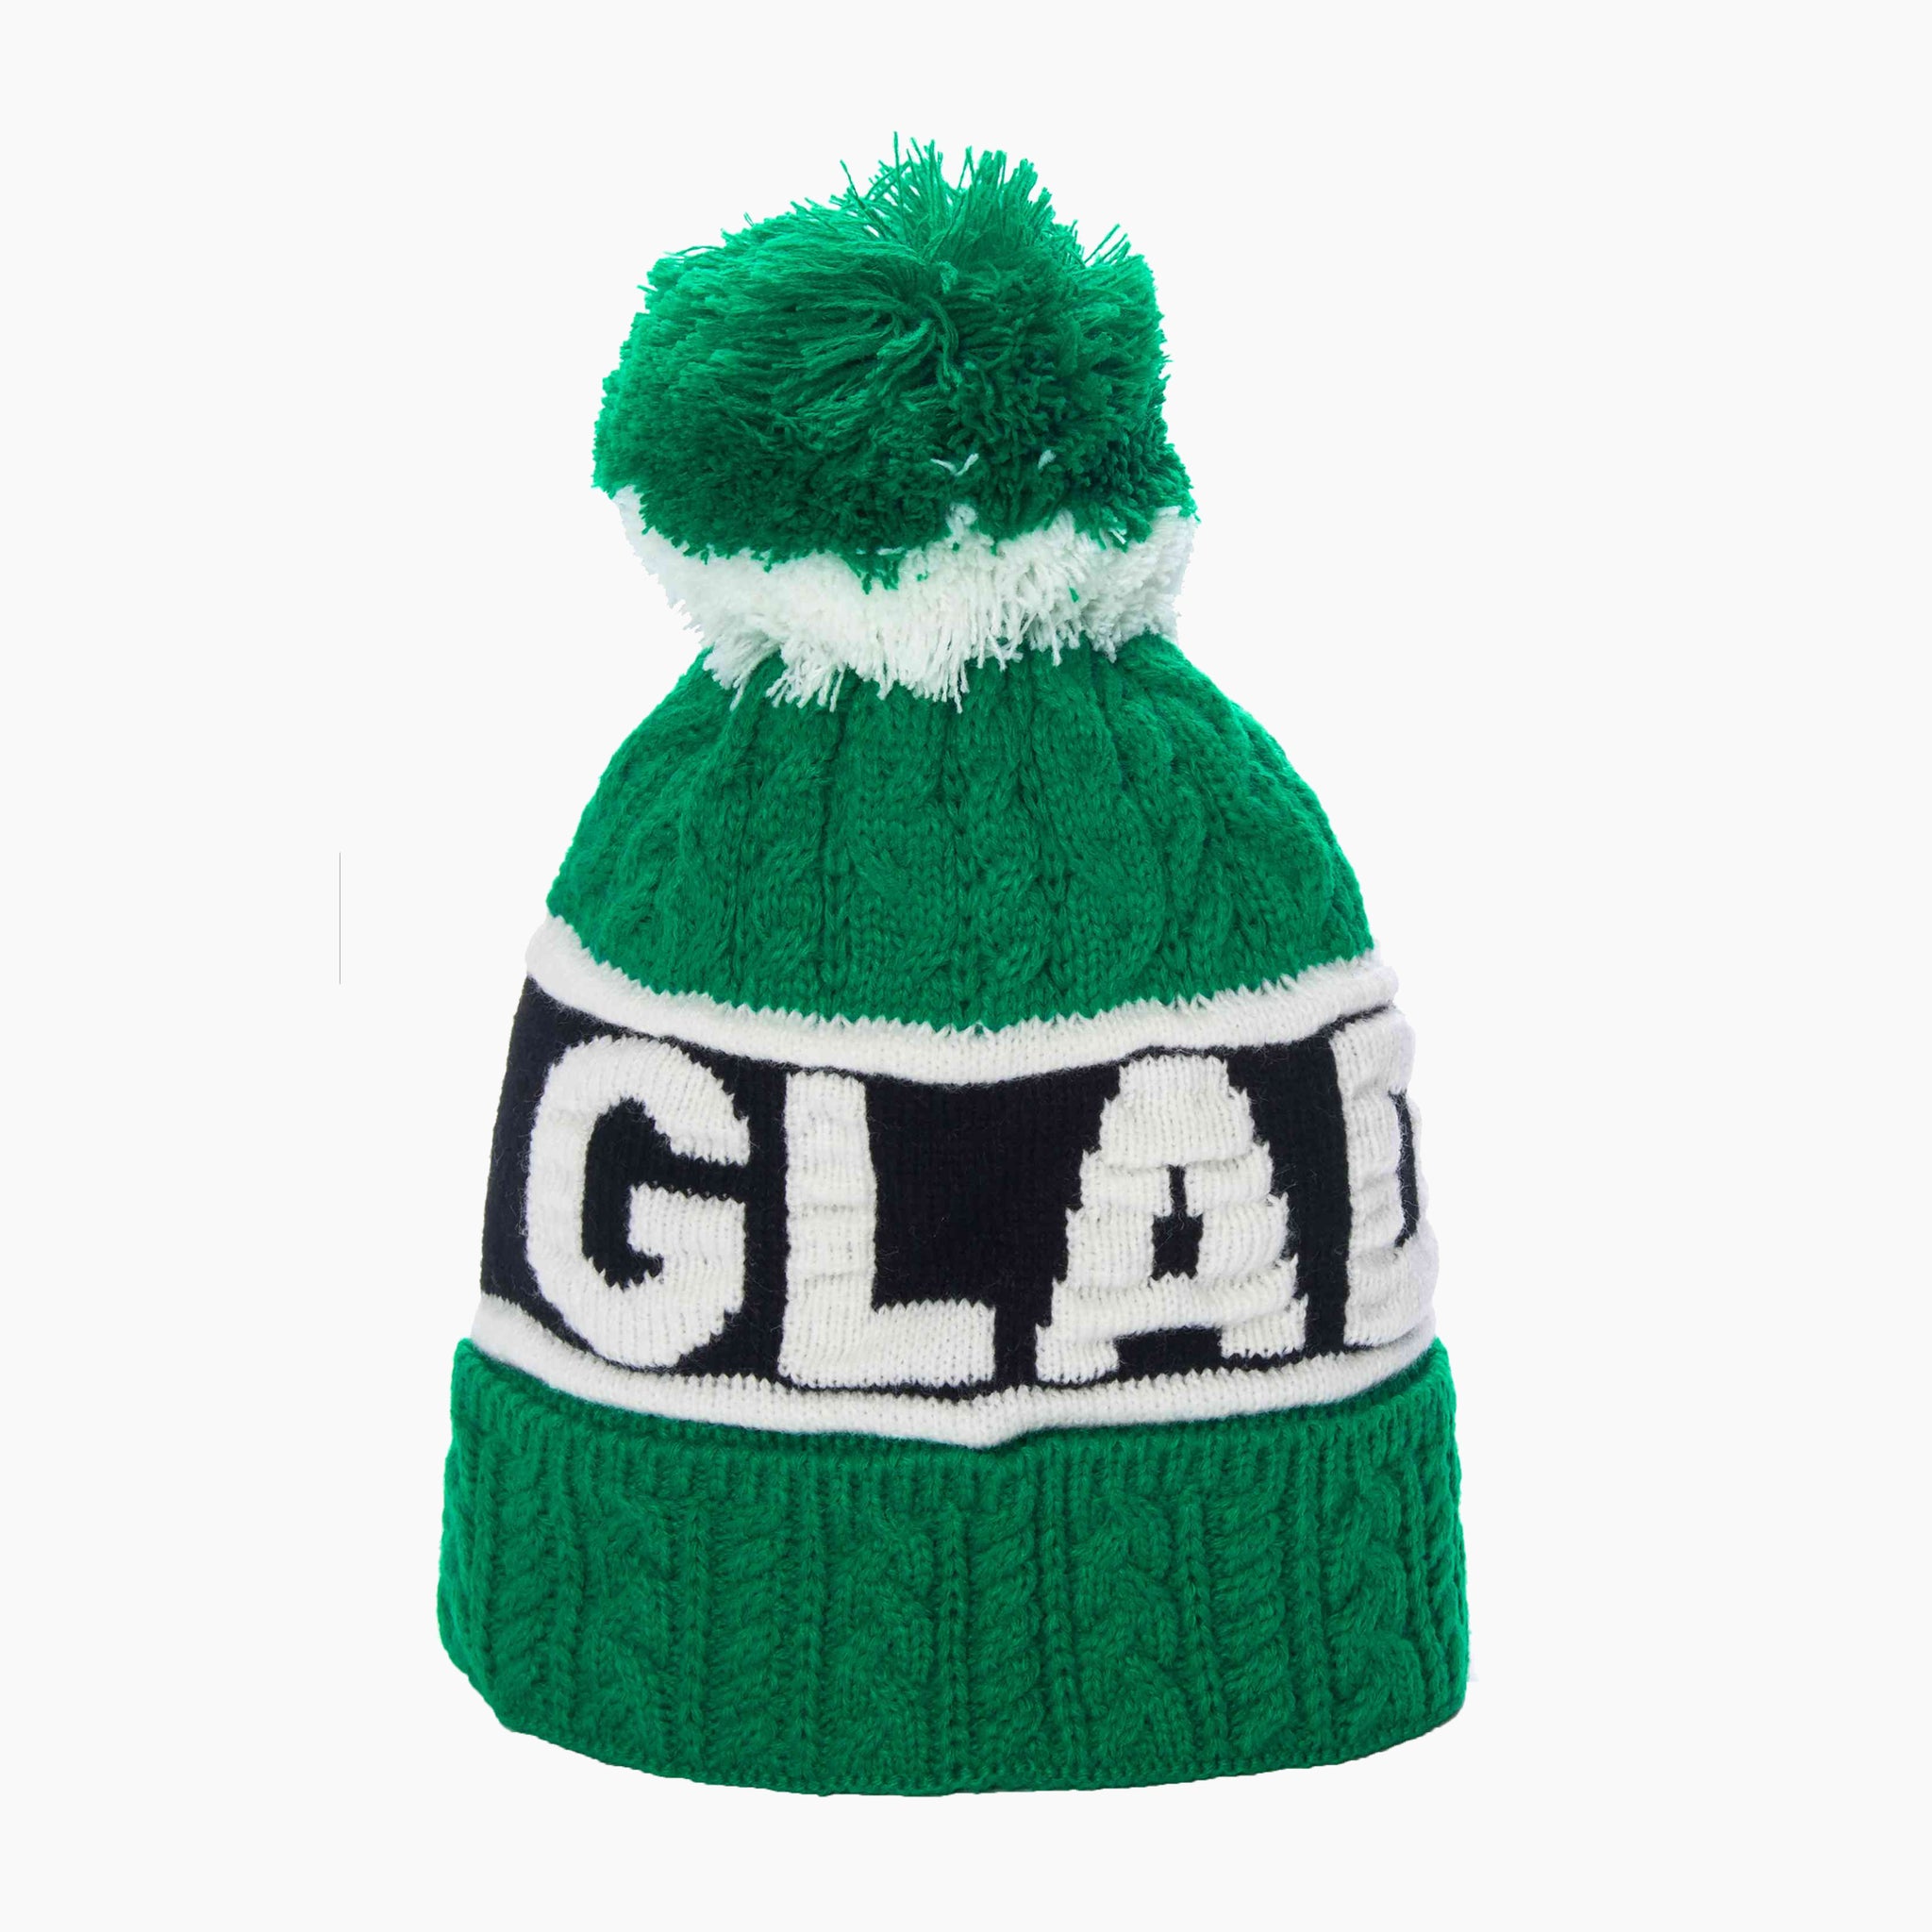 Gladbach Winter Hat with Pompon - Robin Ruth